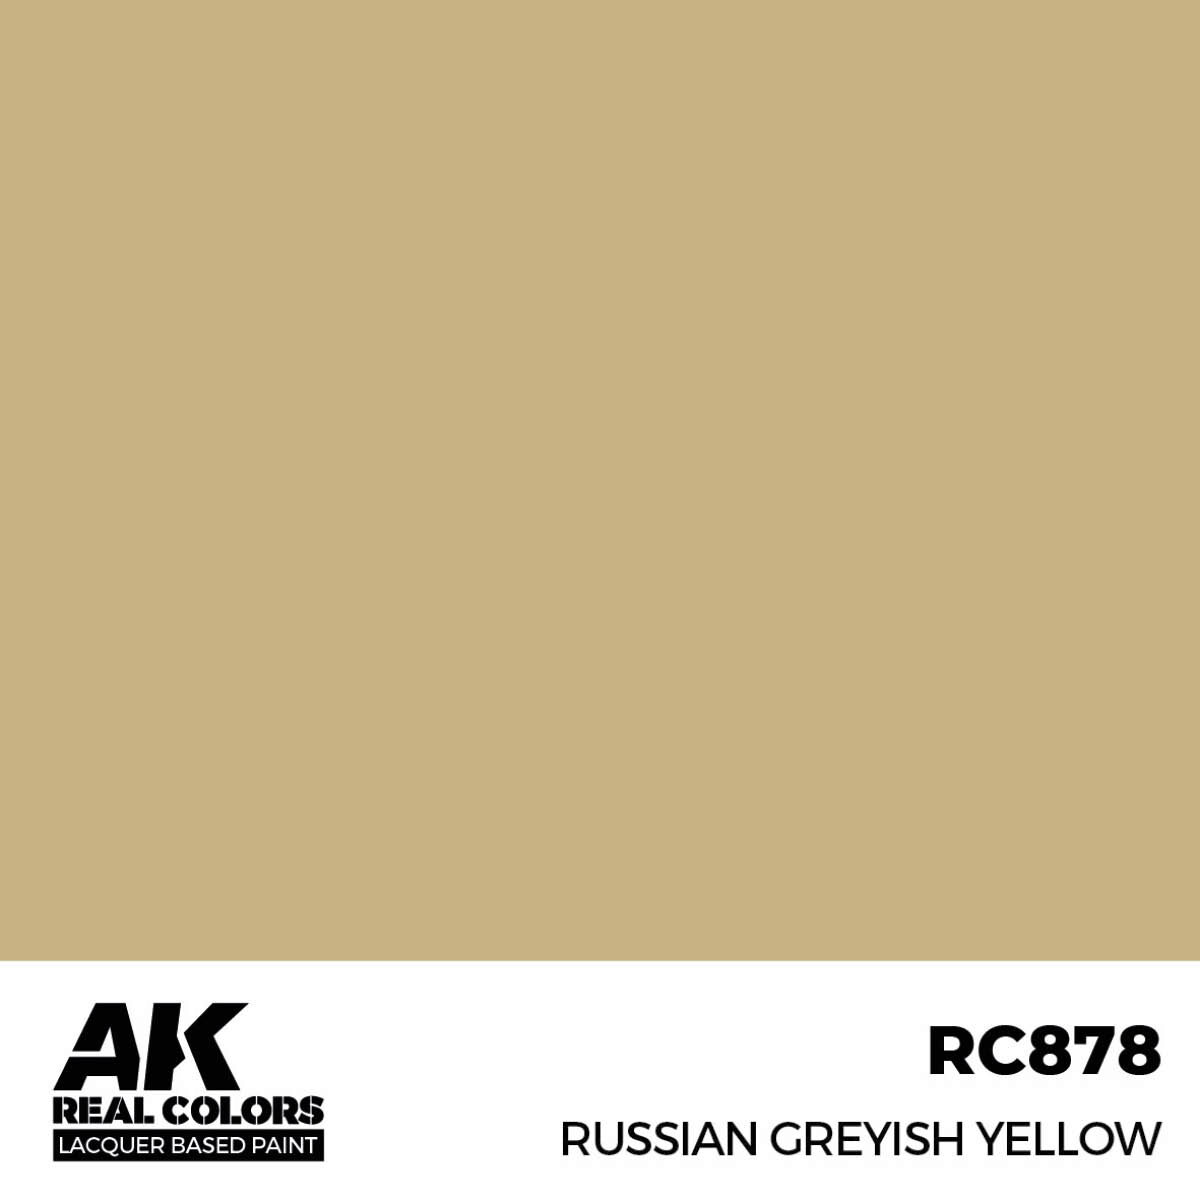 AK RC878 Real Colors Russian Greyish Yellow 17 ml.